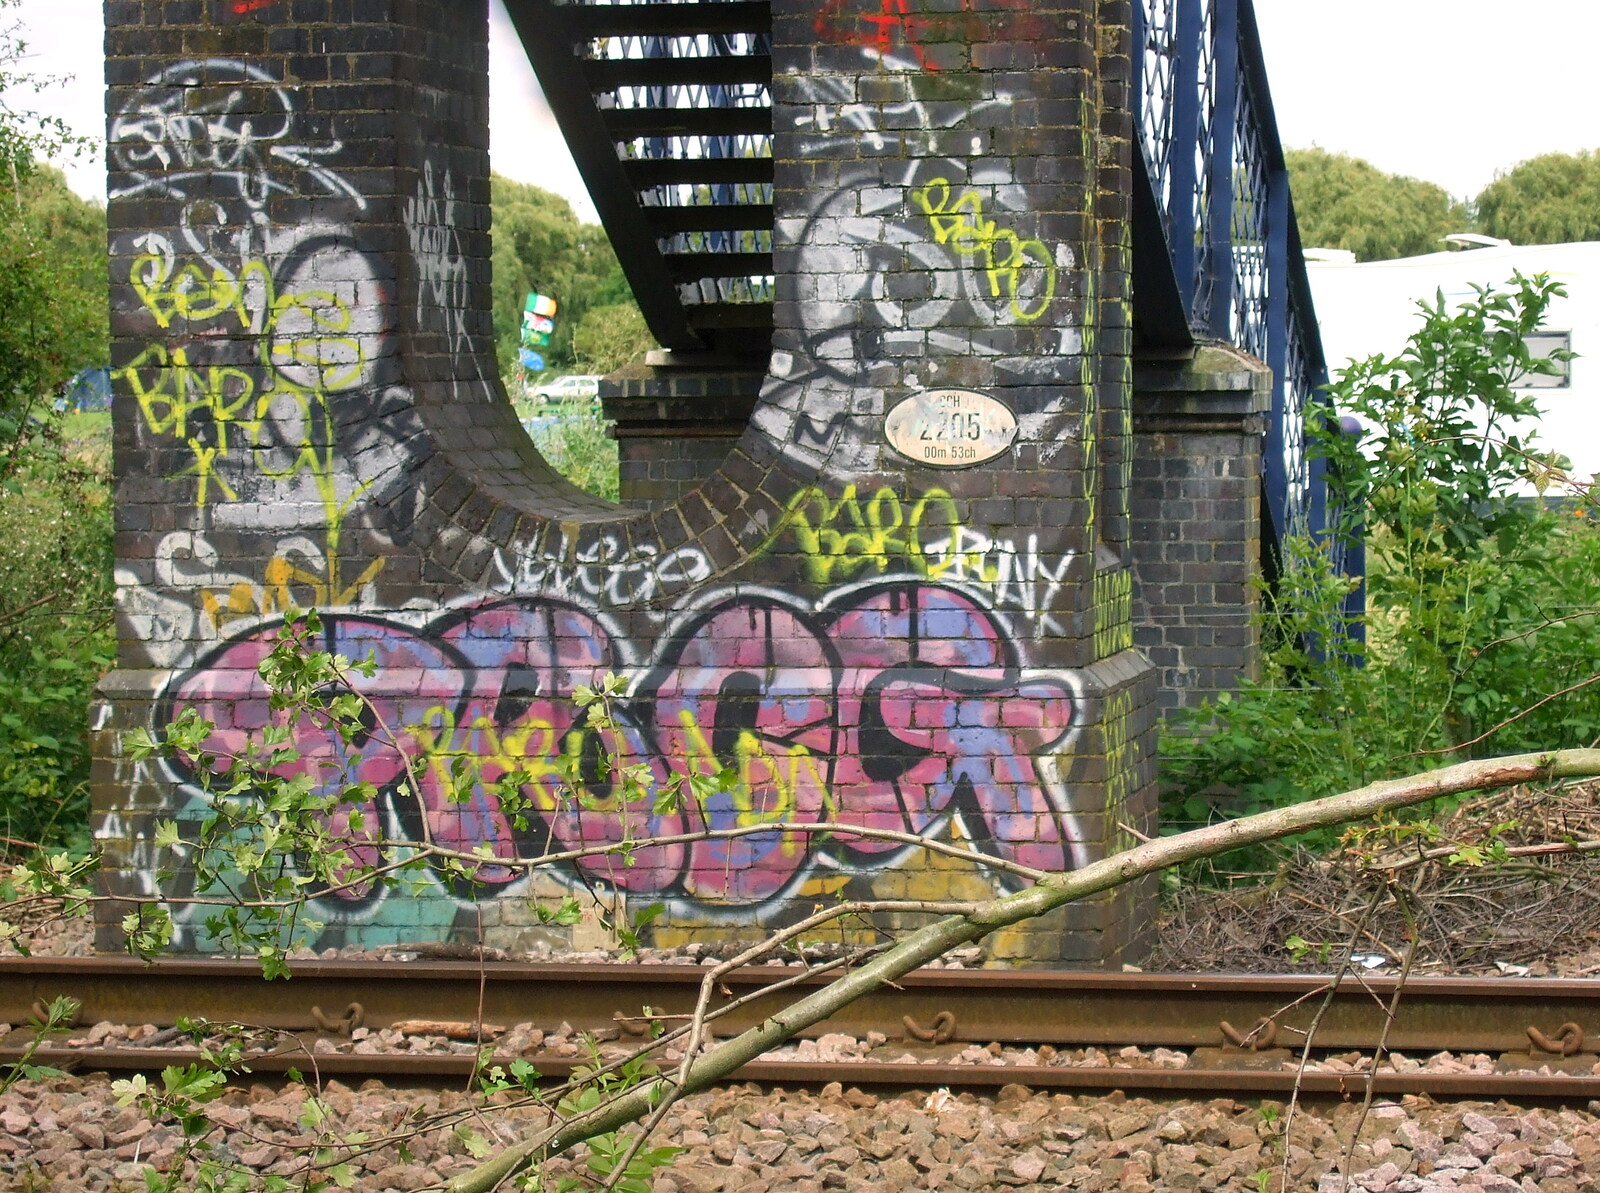 Prog fan graffiti on the Coldham's railway bridge from The Cambridge Folk Festival, Cherry Hinton, Cambridge - 28th July 2012